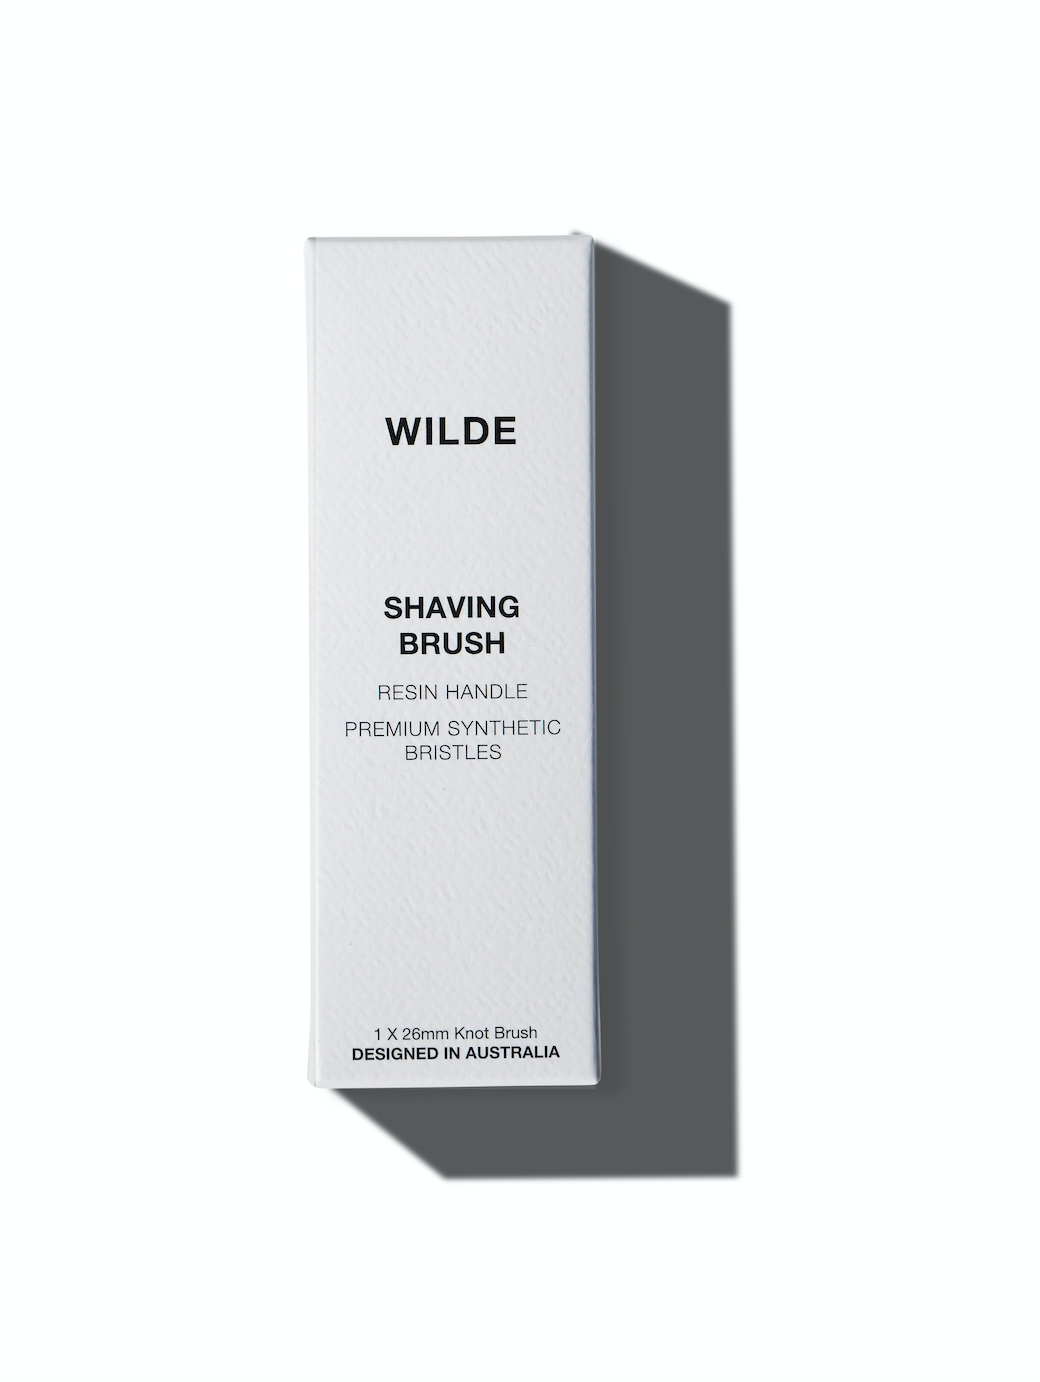 Wilde shaving brush resin handle synthetic bristles vegan 